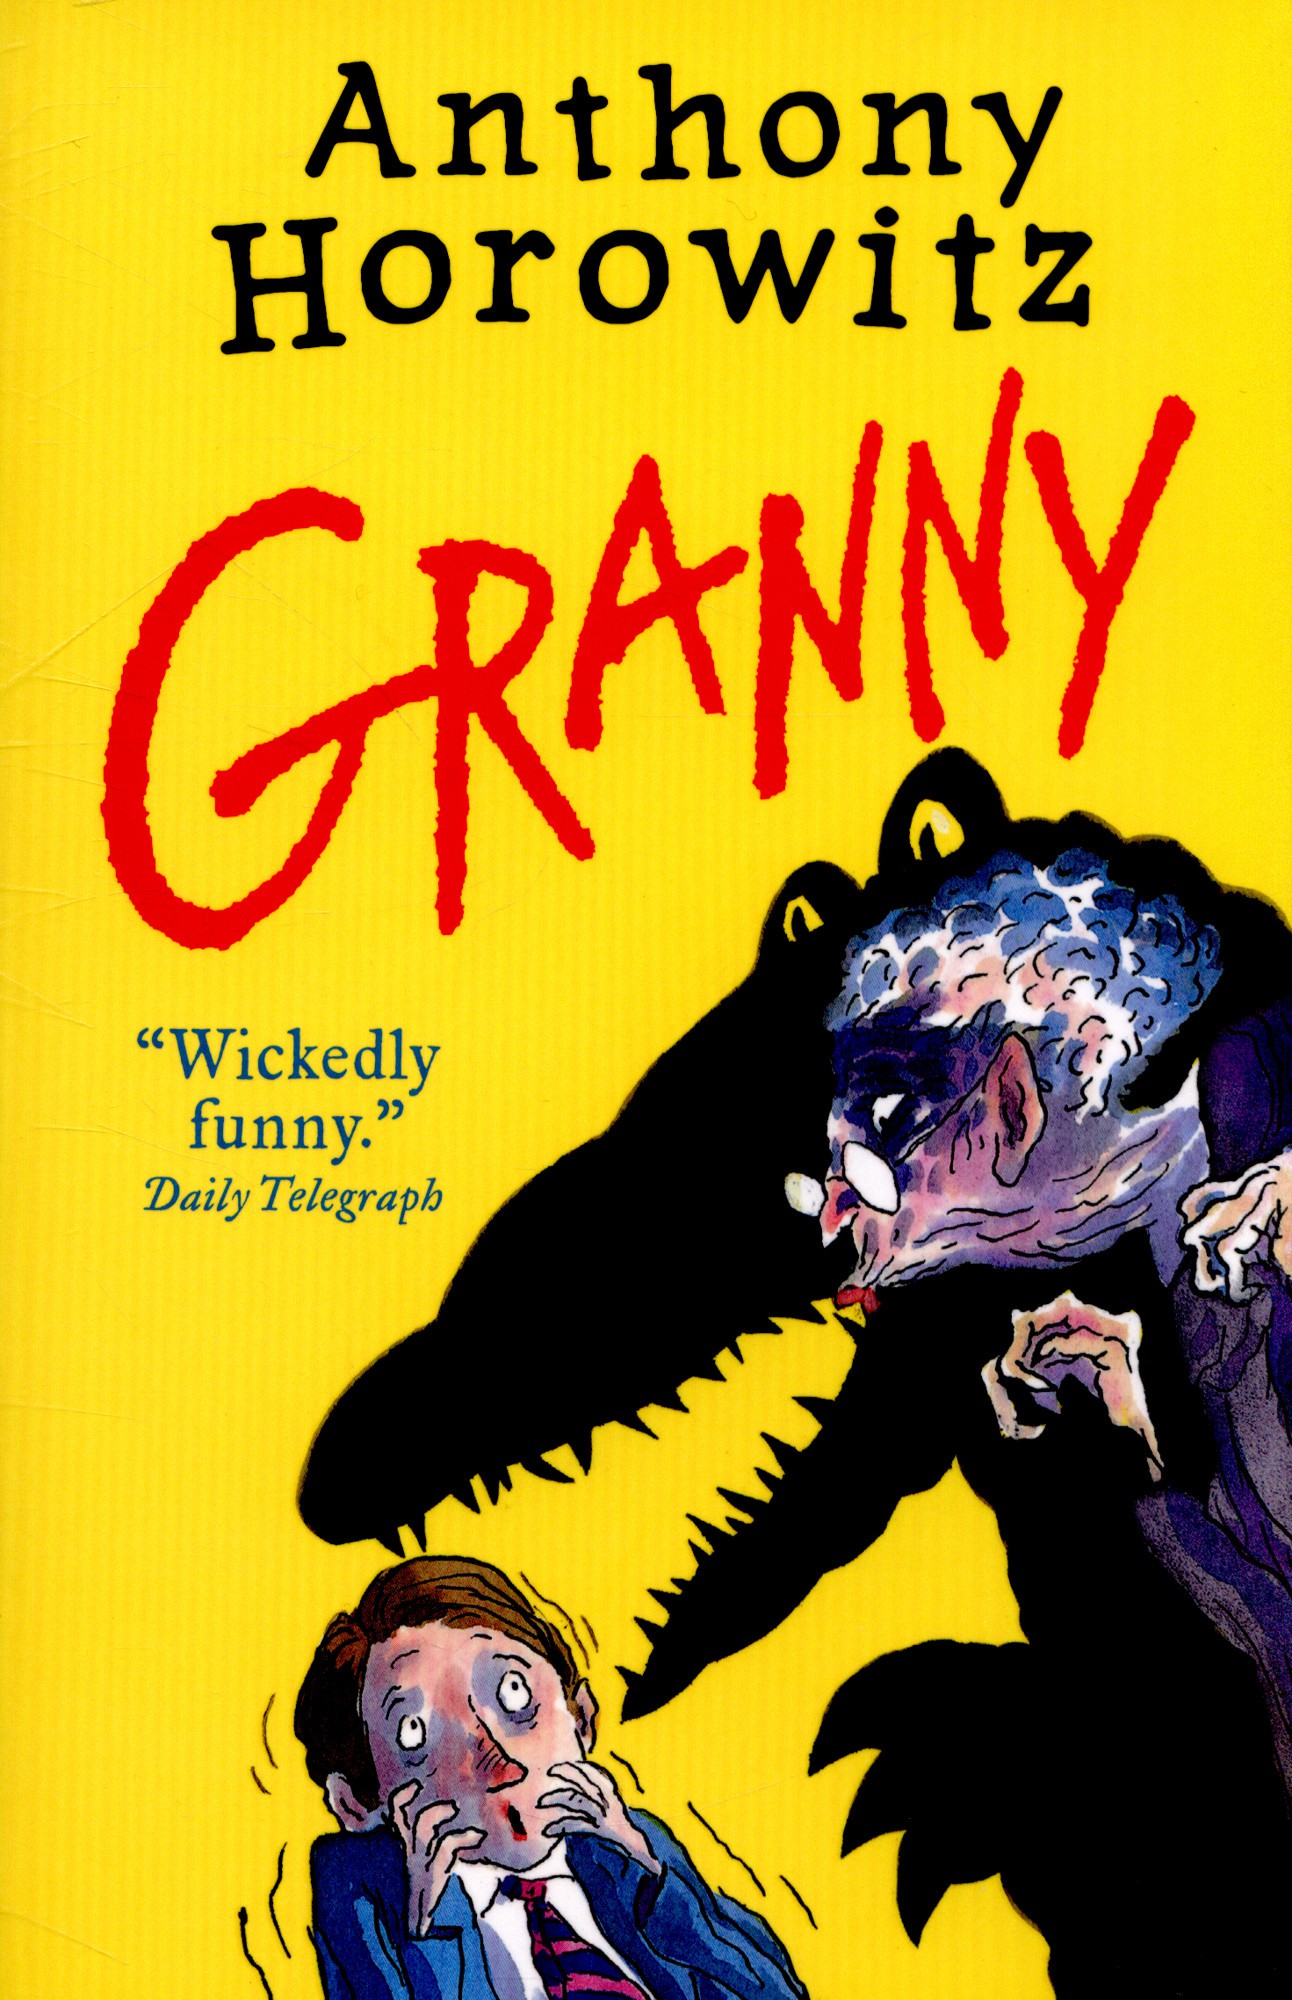 Granny by Anthony Horowitz